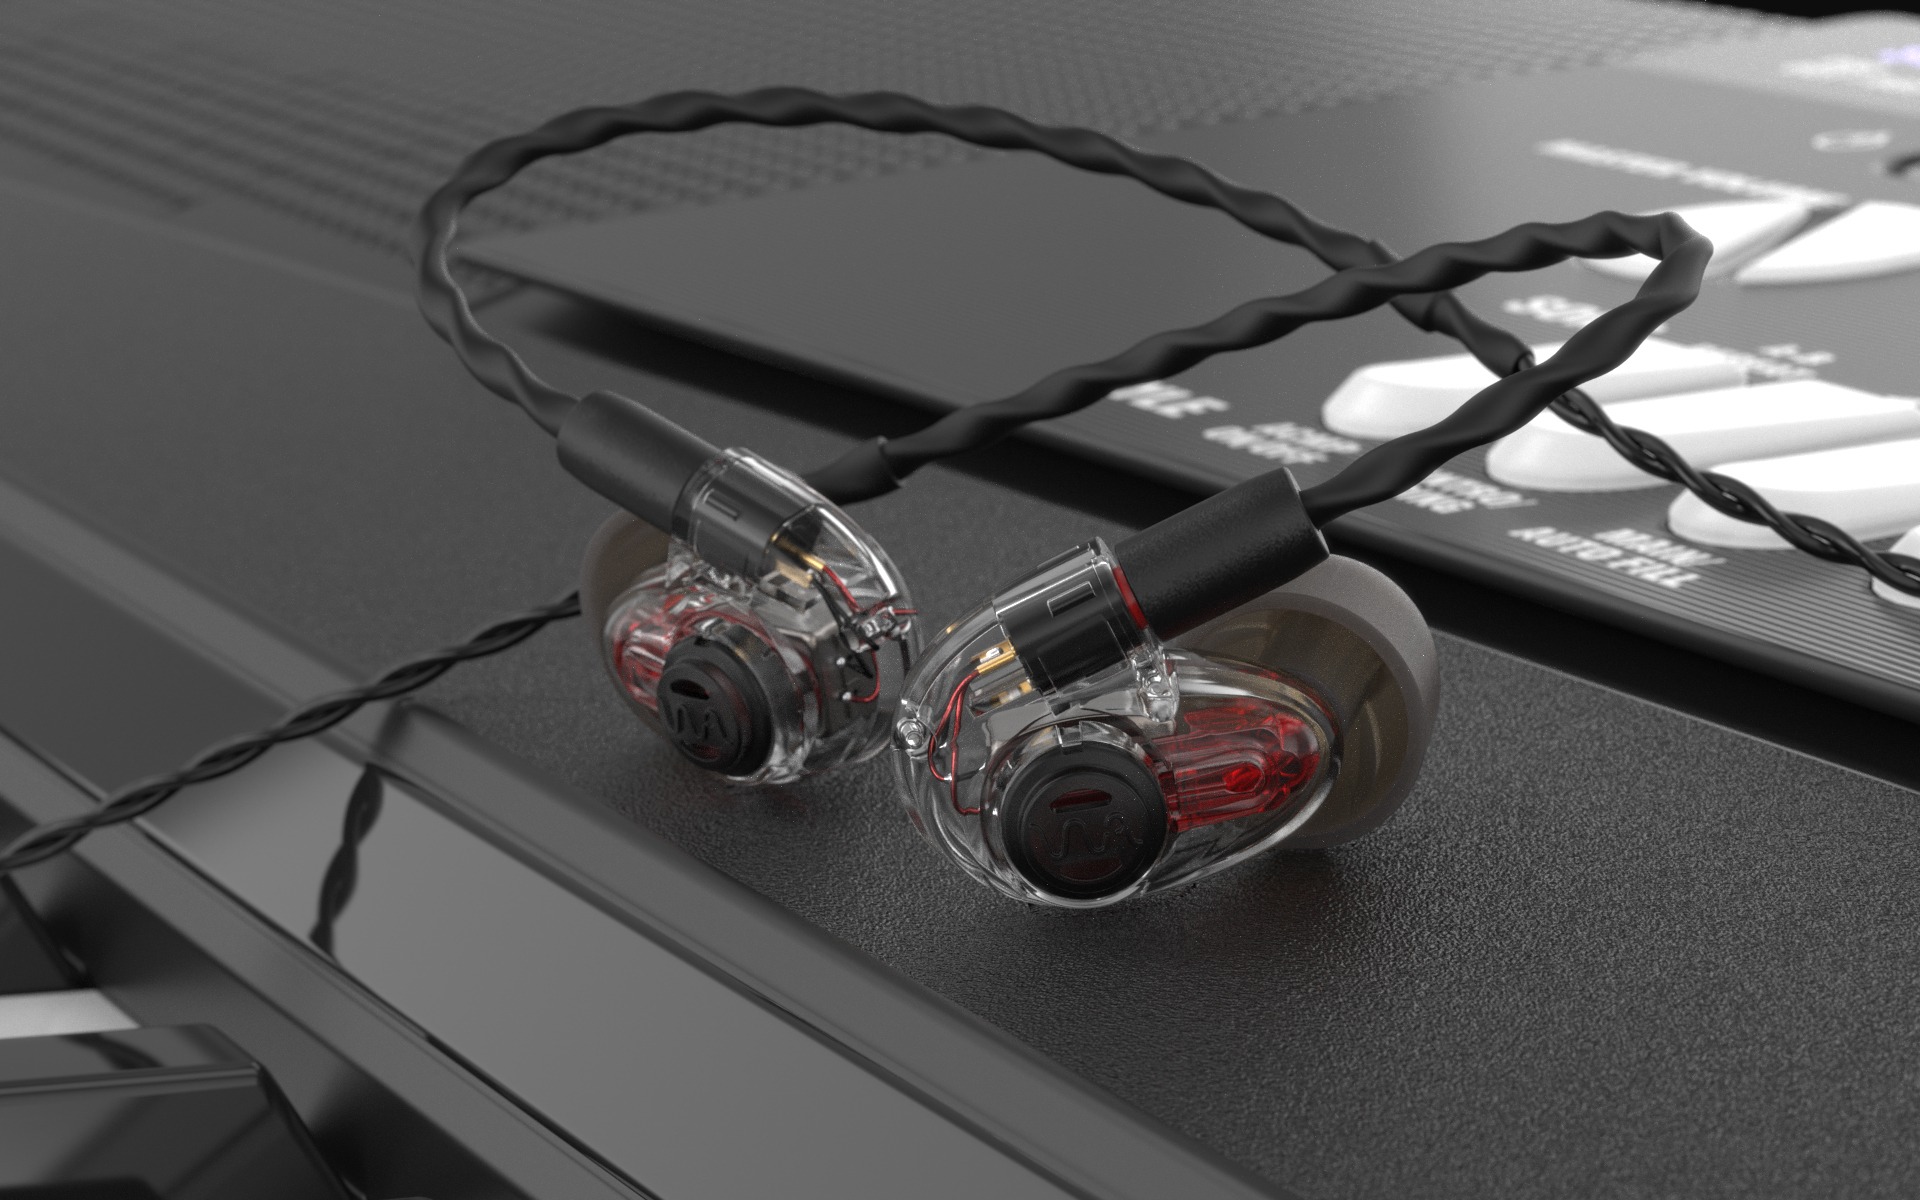 AM Pro X10 Earphones - Westone Audio